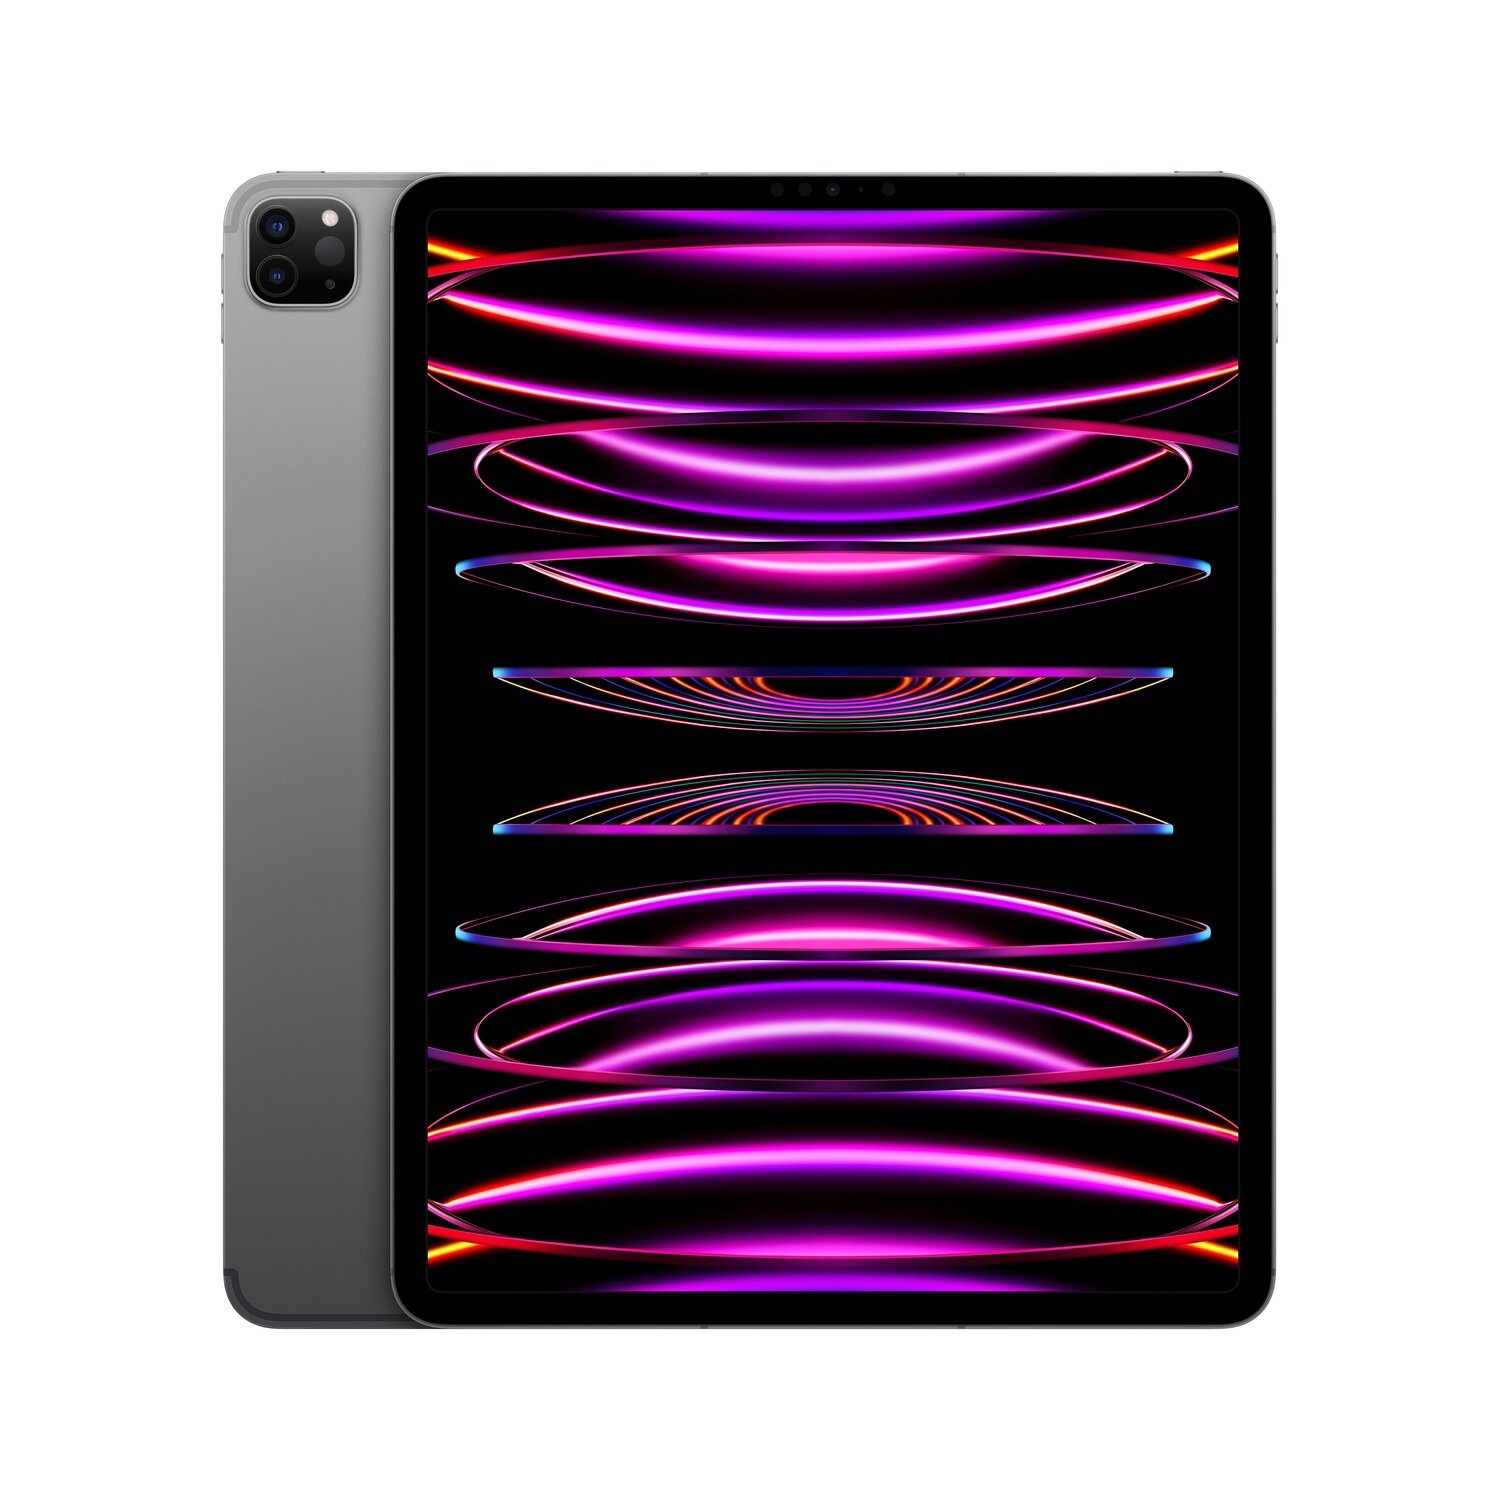 Apple 12.9 inç iPad Pro WiFi + Cellular 256GB Uzay Grisi - Troy Estore